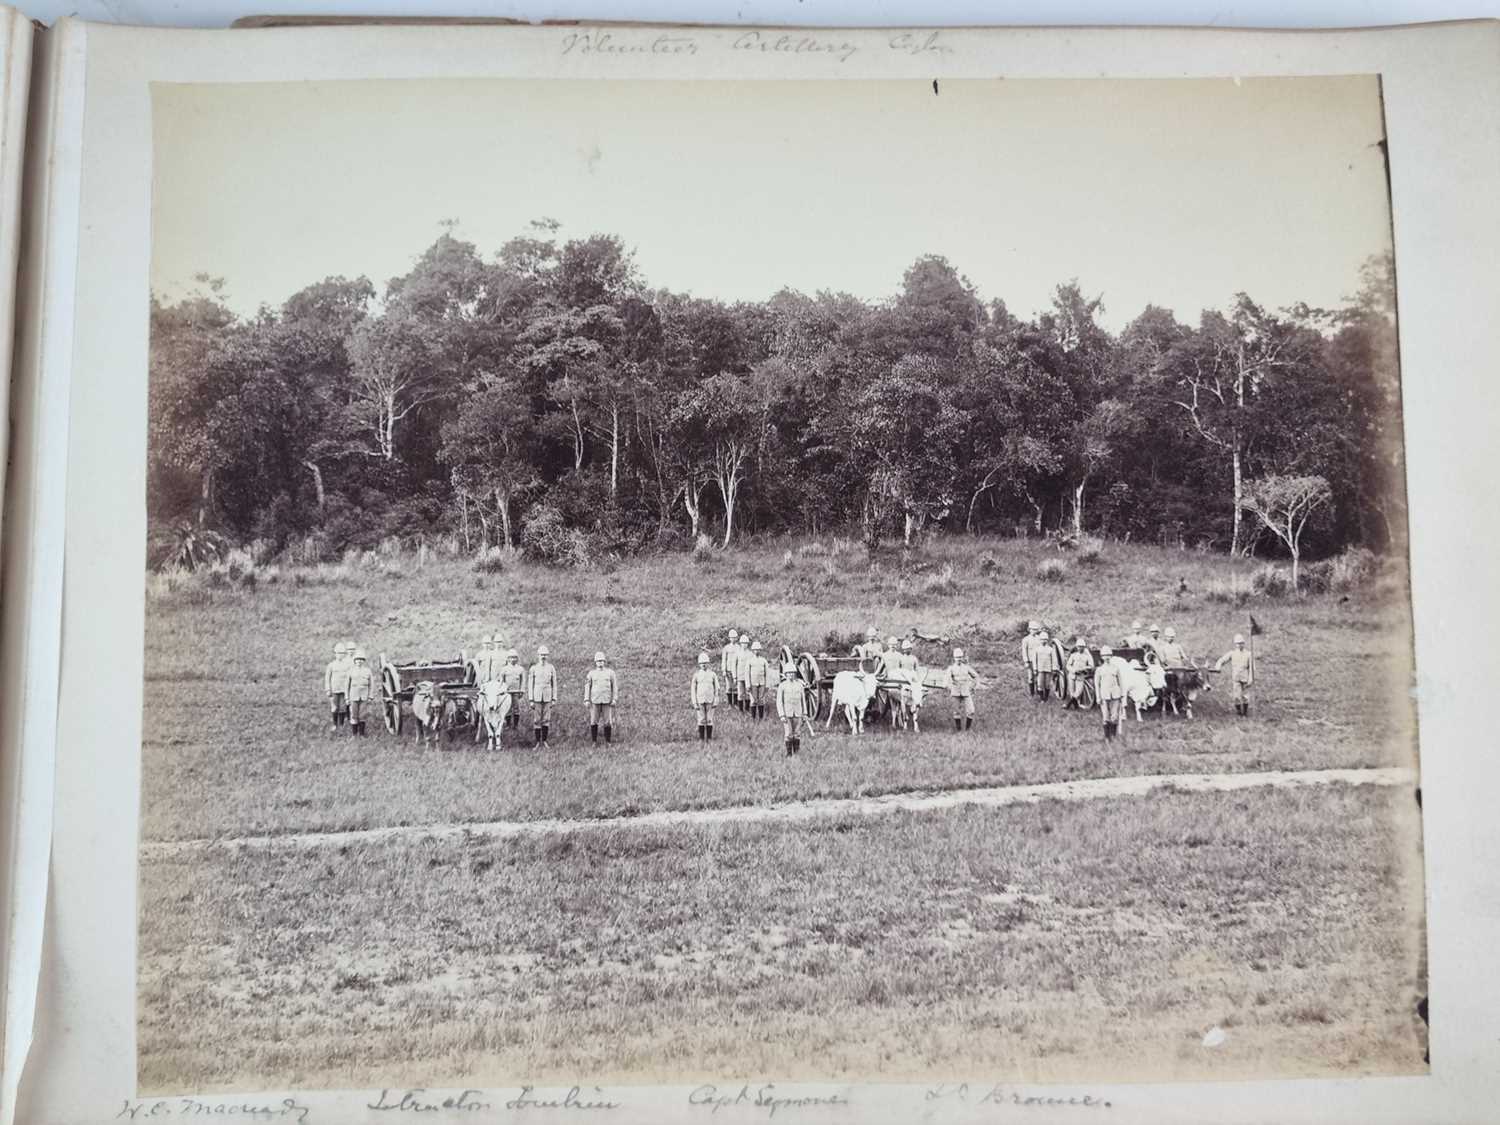 Ceylon (Sri Lanka) Interest - Photograph and watercolour album - Image 3 of 26